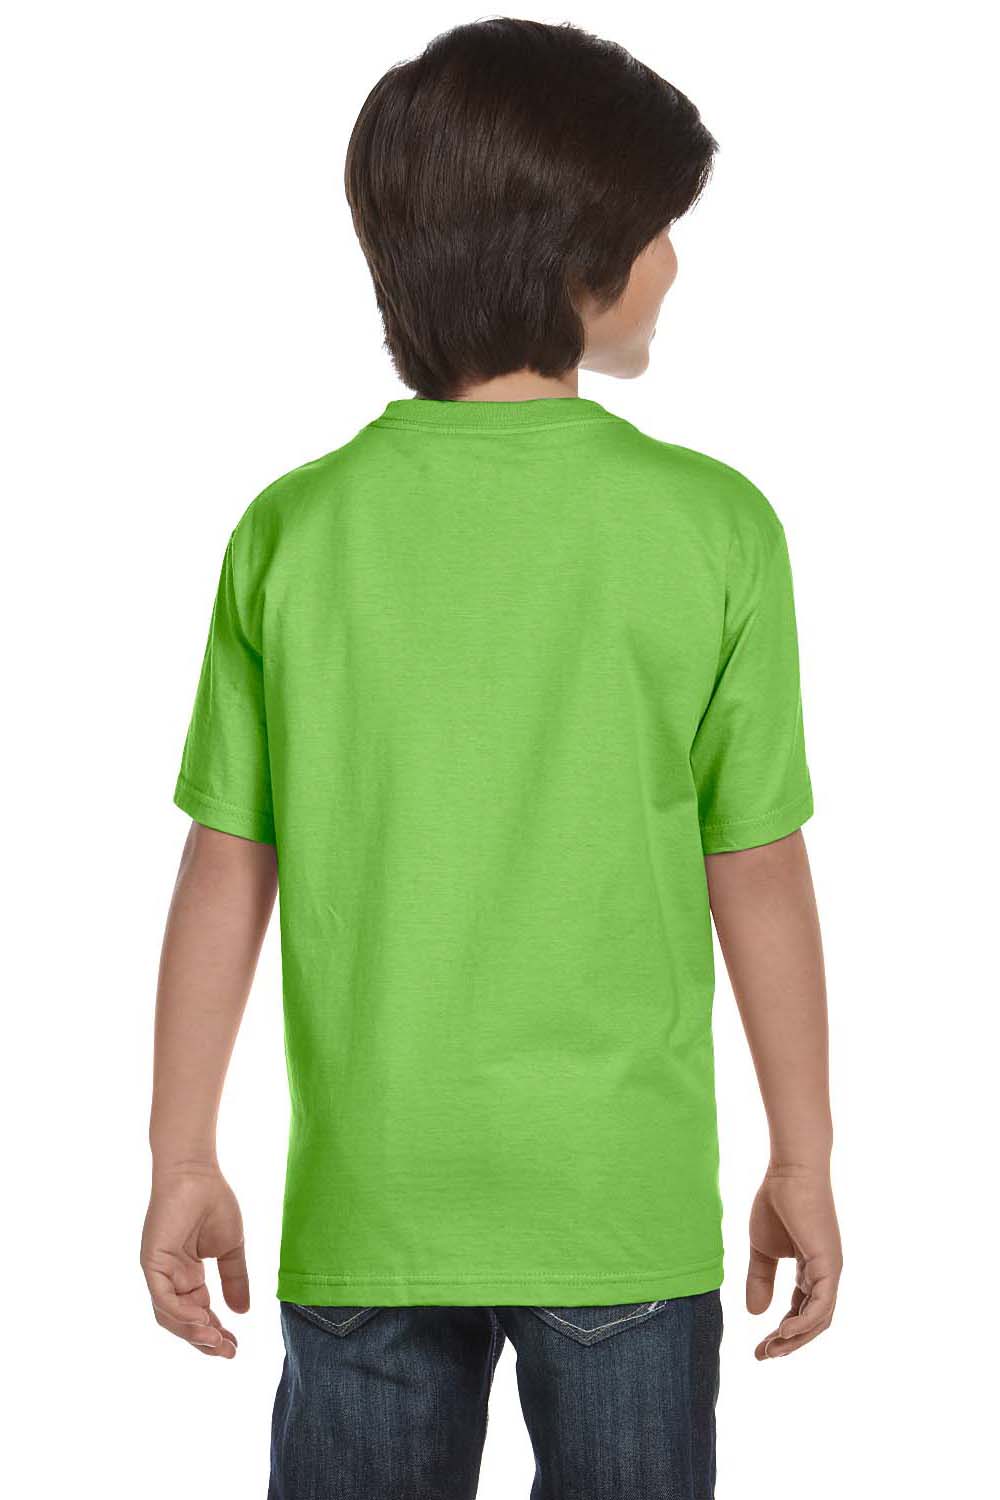 Gildan G800B Youth DryBlend Moisture Wicking Short Sleeve Crewneck T-Shirt Lime Green Back